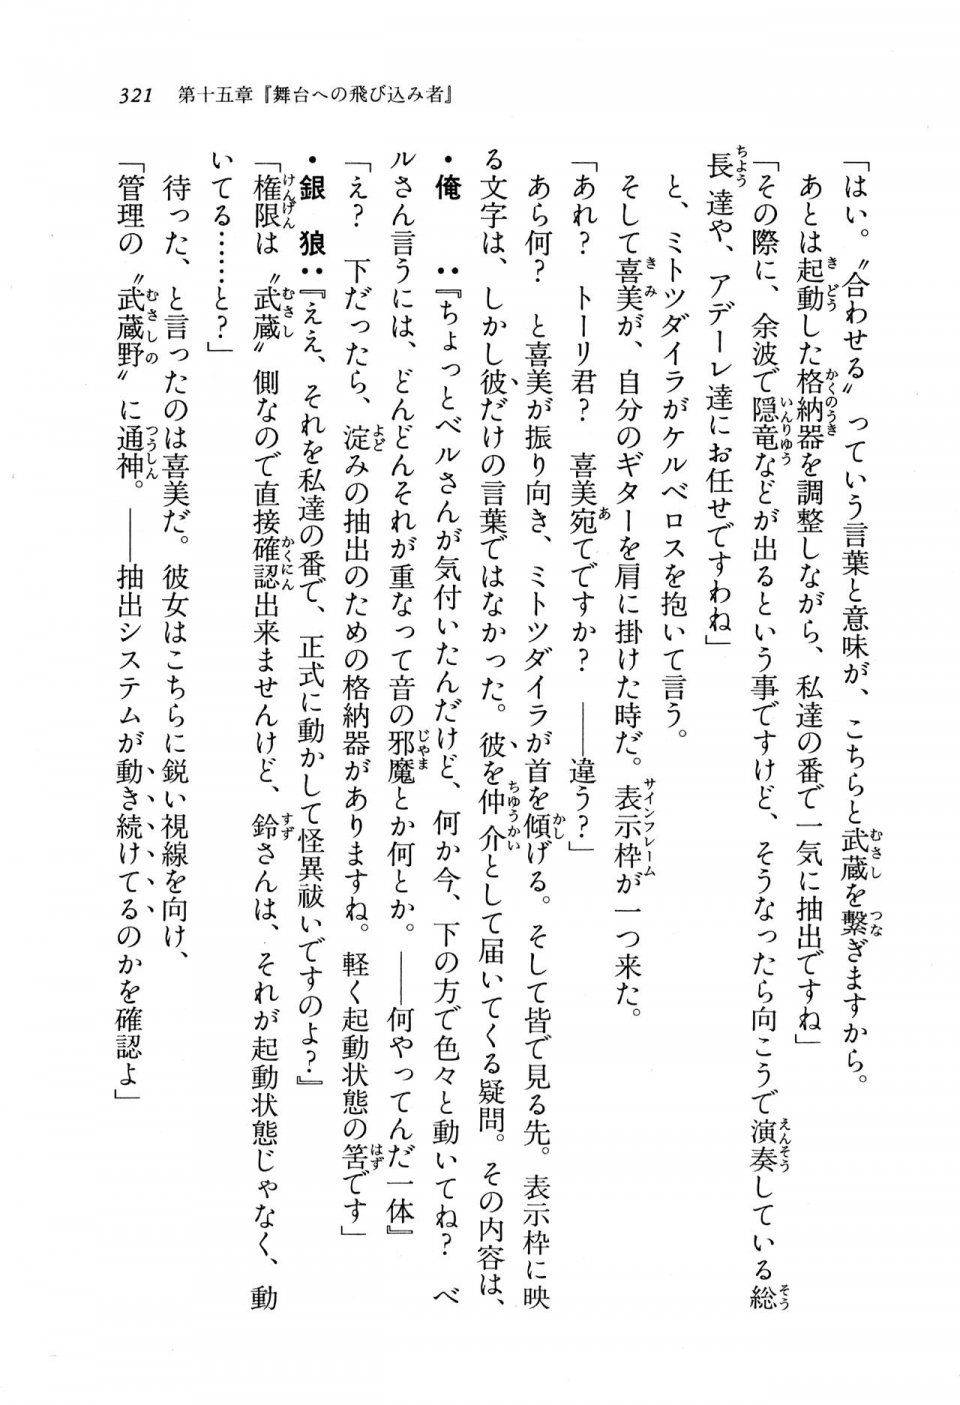 Kyoukai Senjou no Horizon BD Special Mininovel Vol 8(4B) - Photo #325